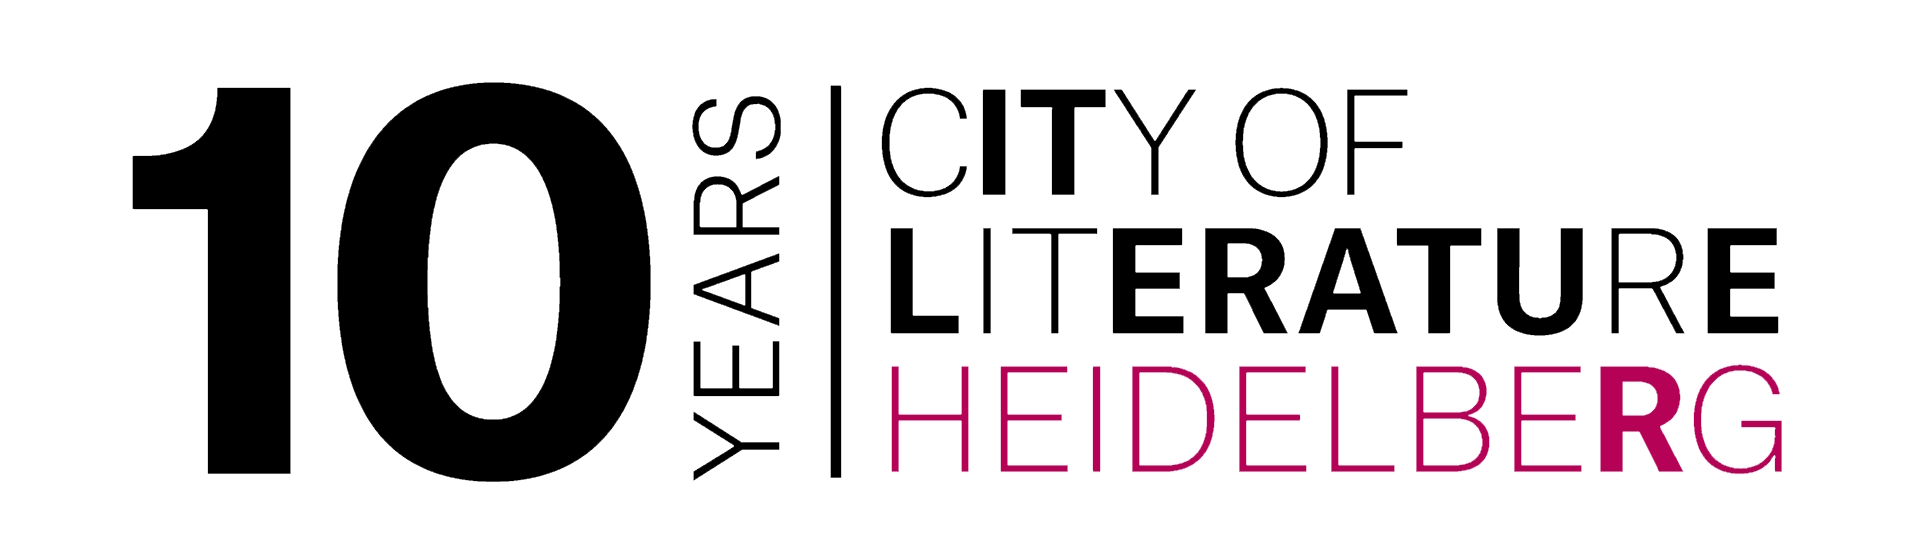 Jubiläumslogo "10 Jahre UNESCO City of Literature Heidelberg"